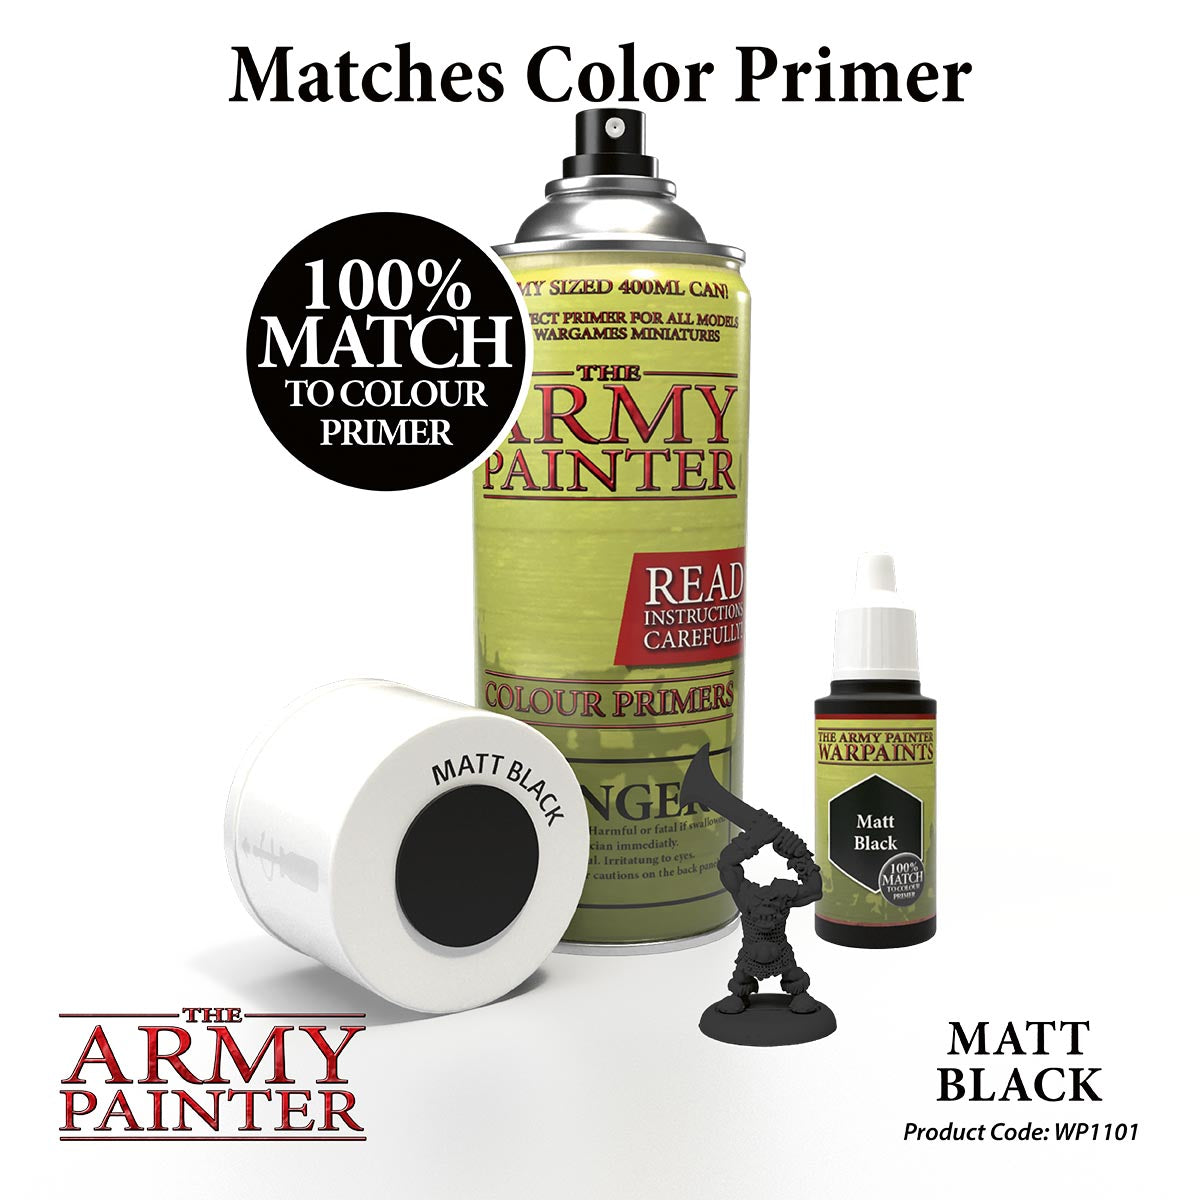 WP1102 Matt Black Army Painter Acrylic Warpaints Matching Spray Primer